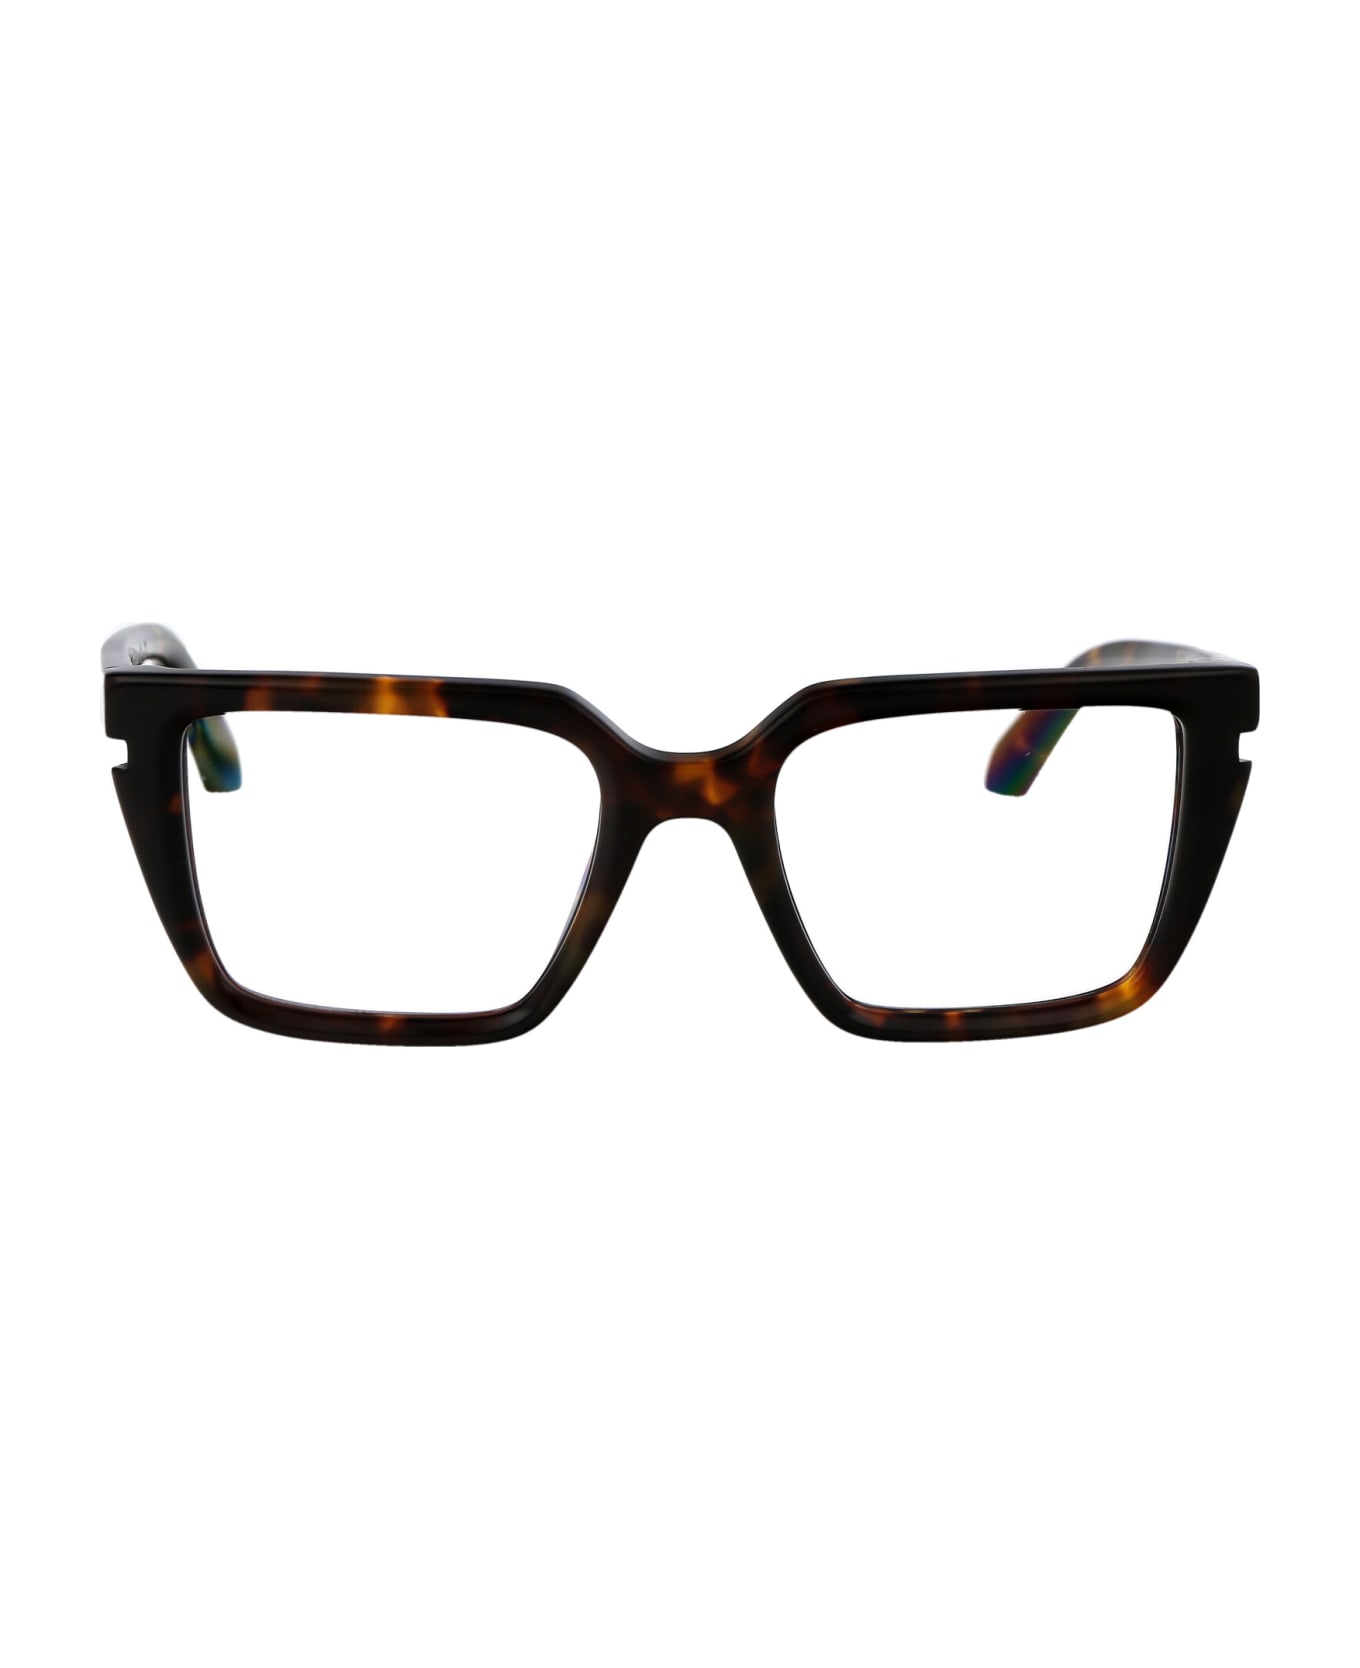 Off-White Optical Style 52 Glasses - 6000 HAVANA アイウェア